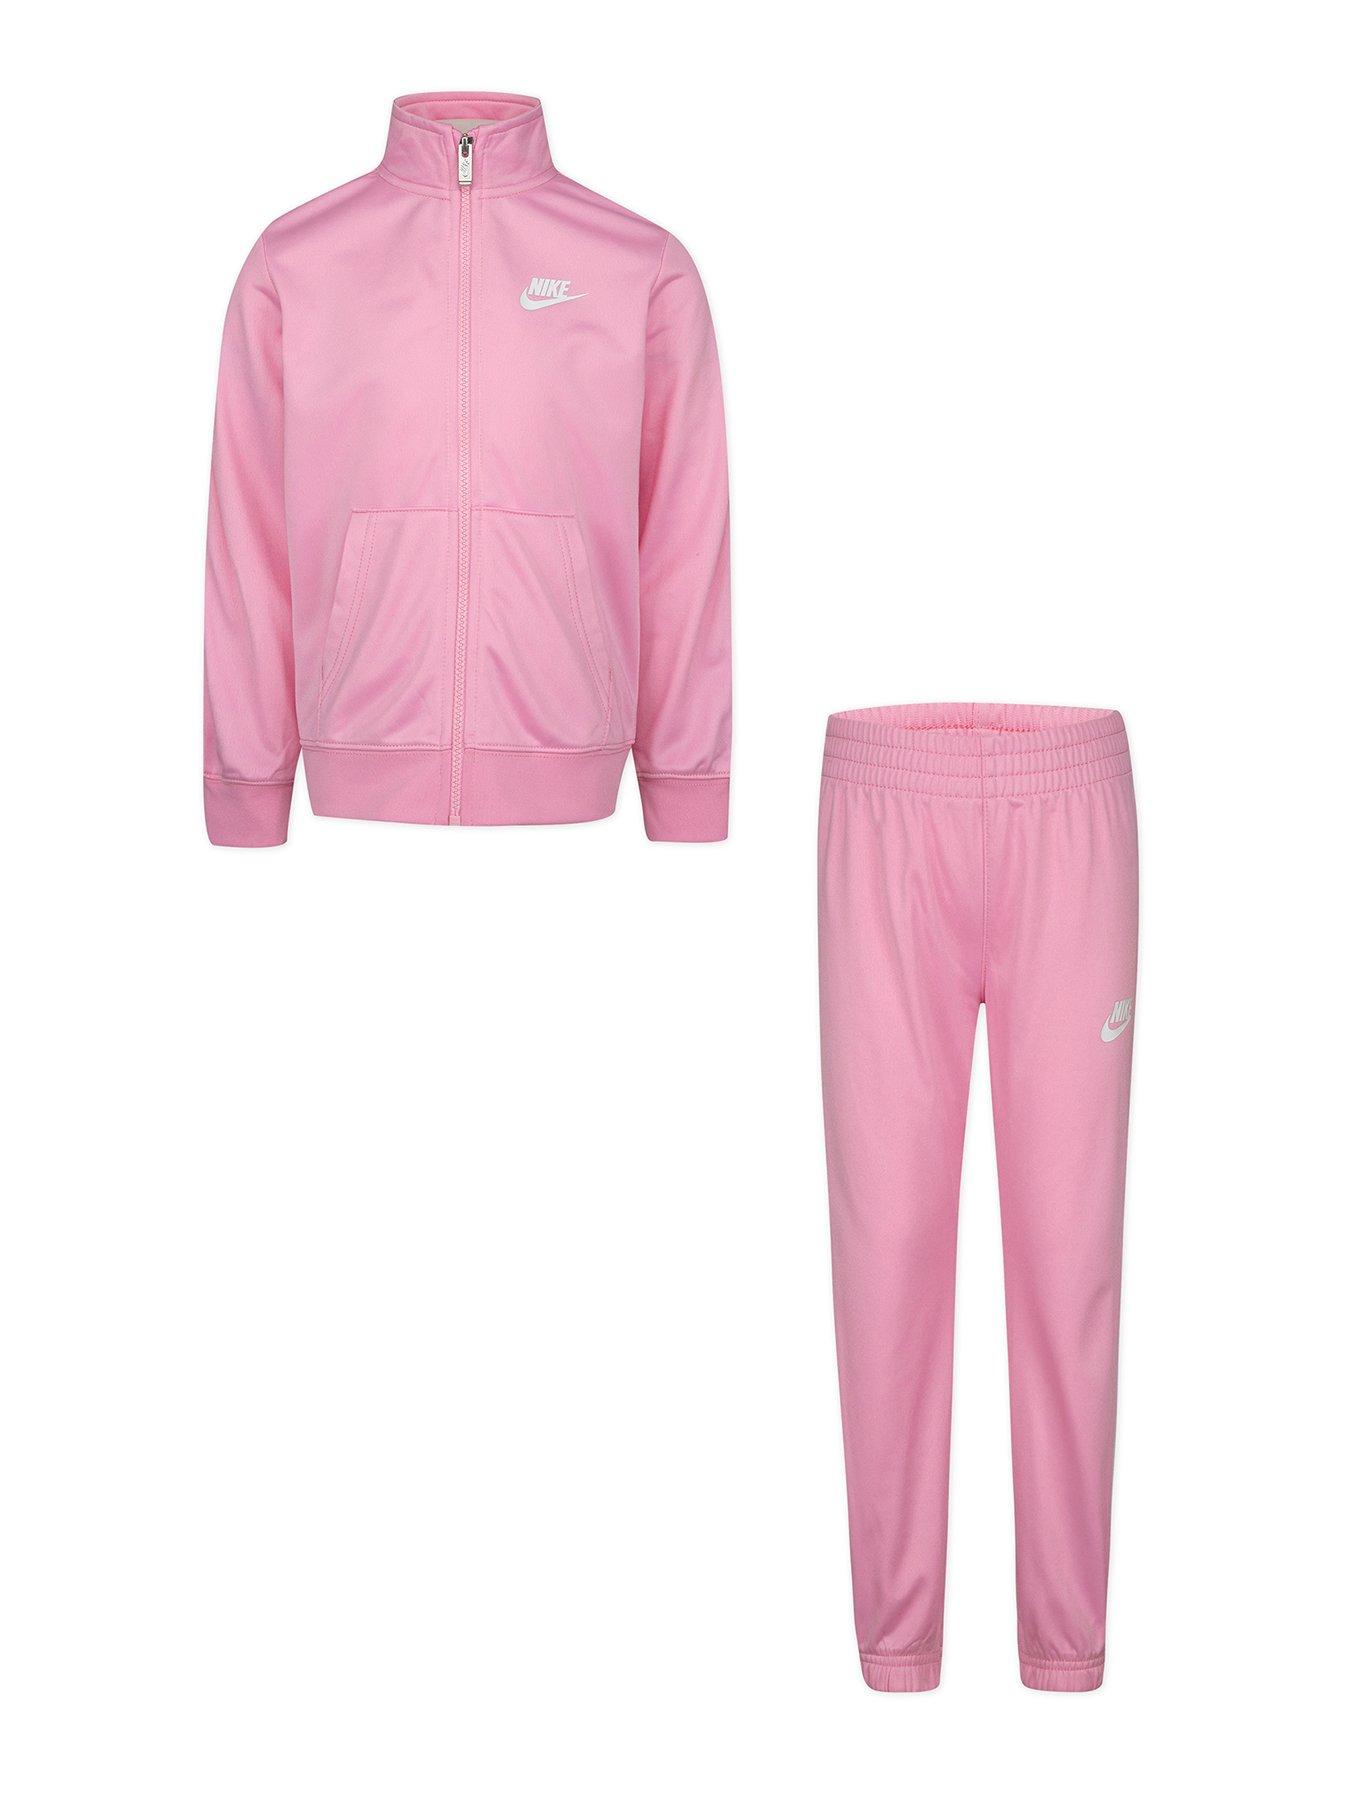 Sportswear Heritage Tracksuit Girls Pink, Multicoloured, 50% OFF